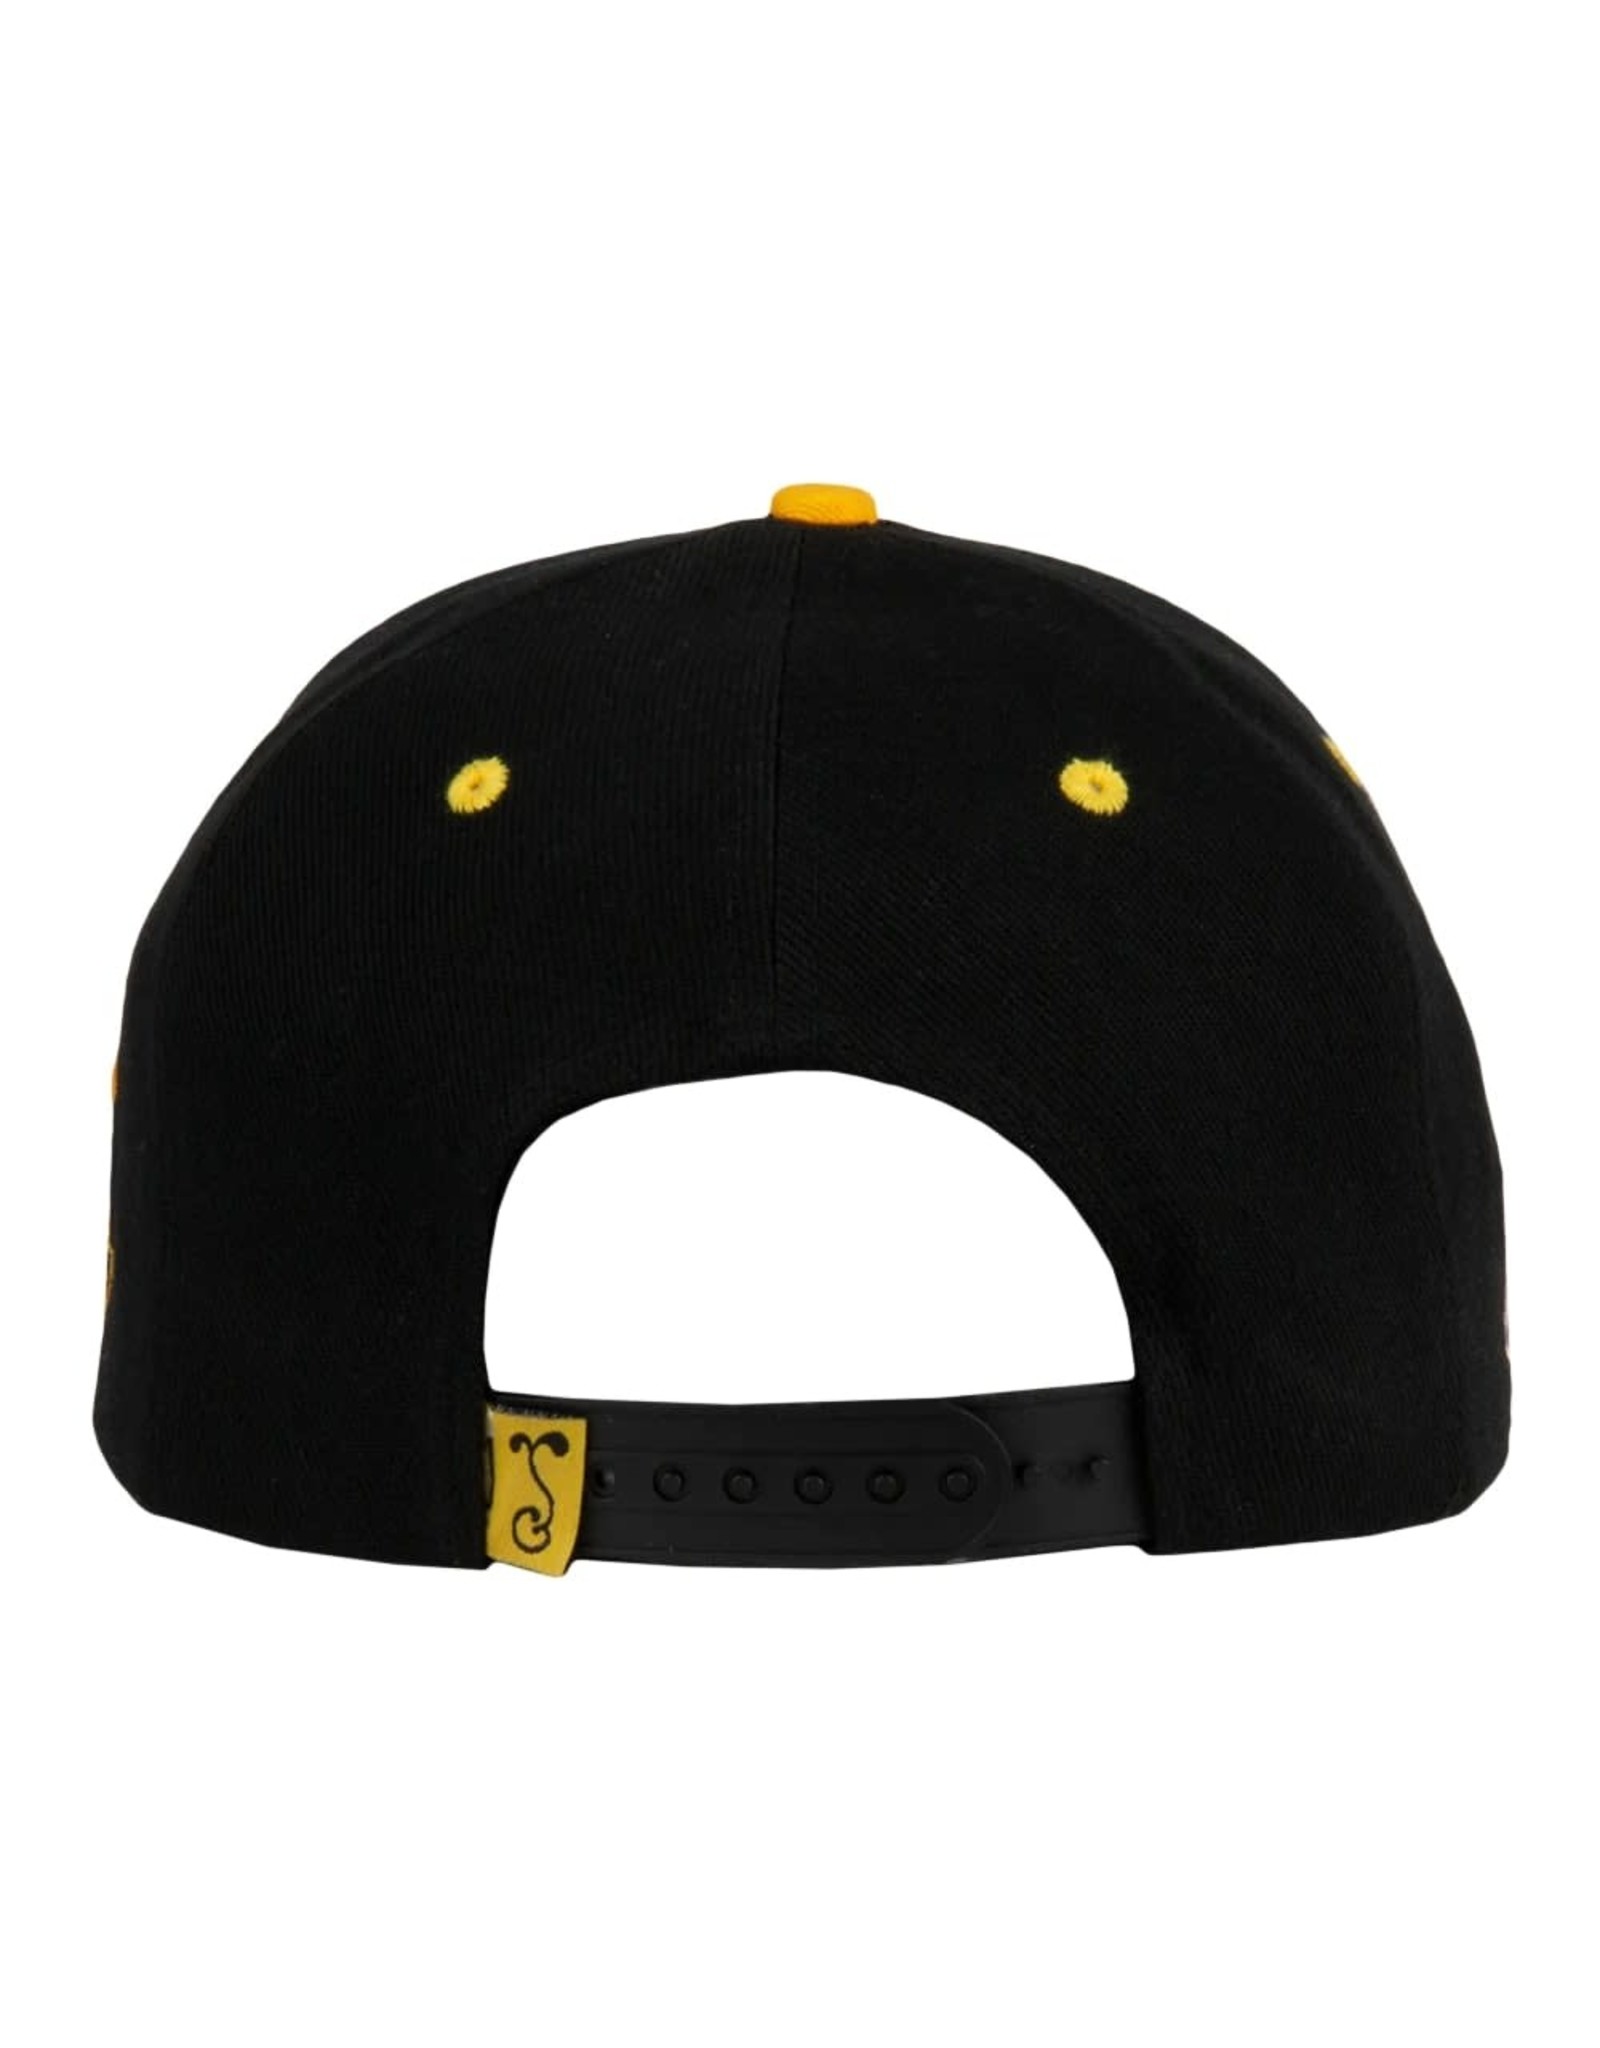 Vincent Gordon Littsburgh Black Snapback Hat L/XL